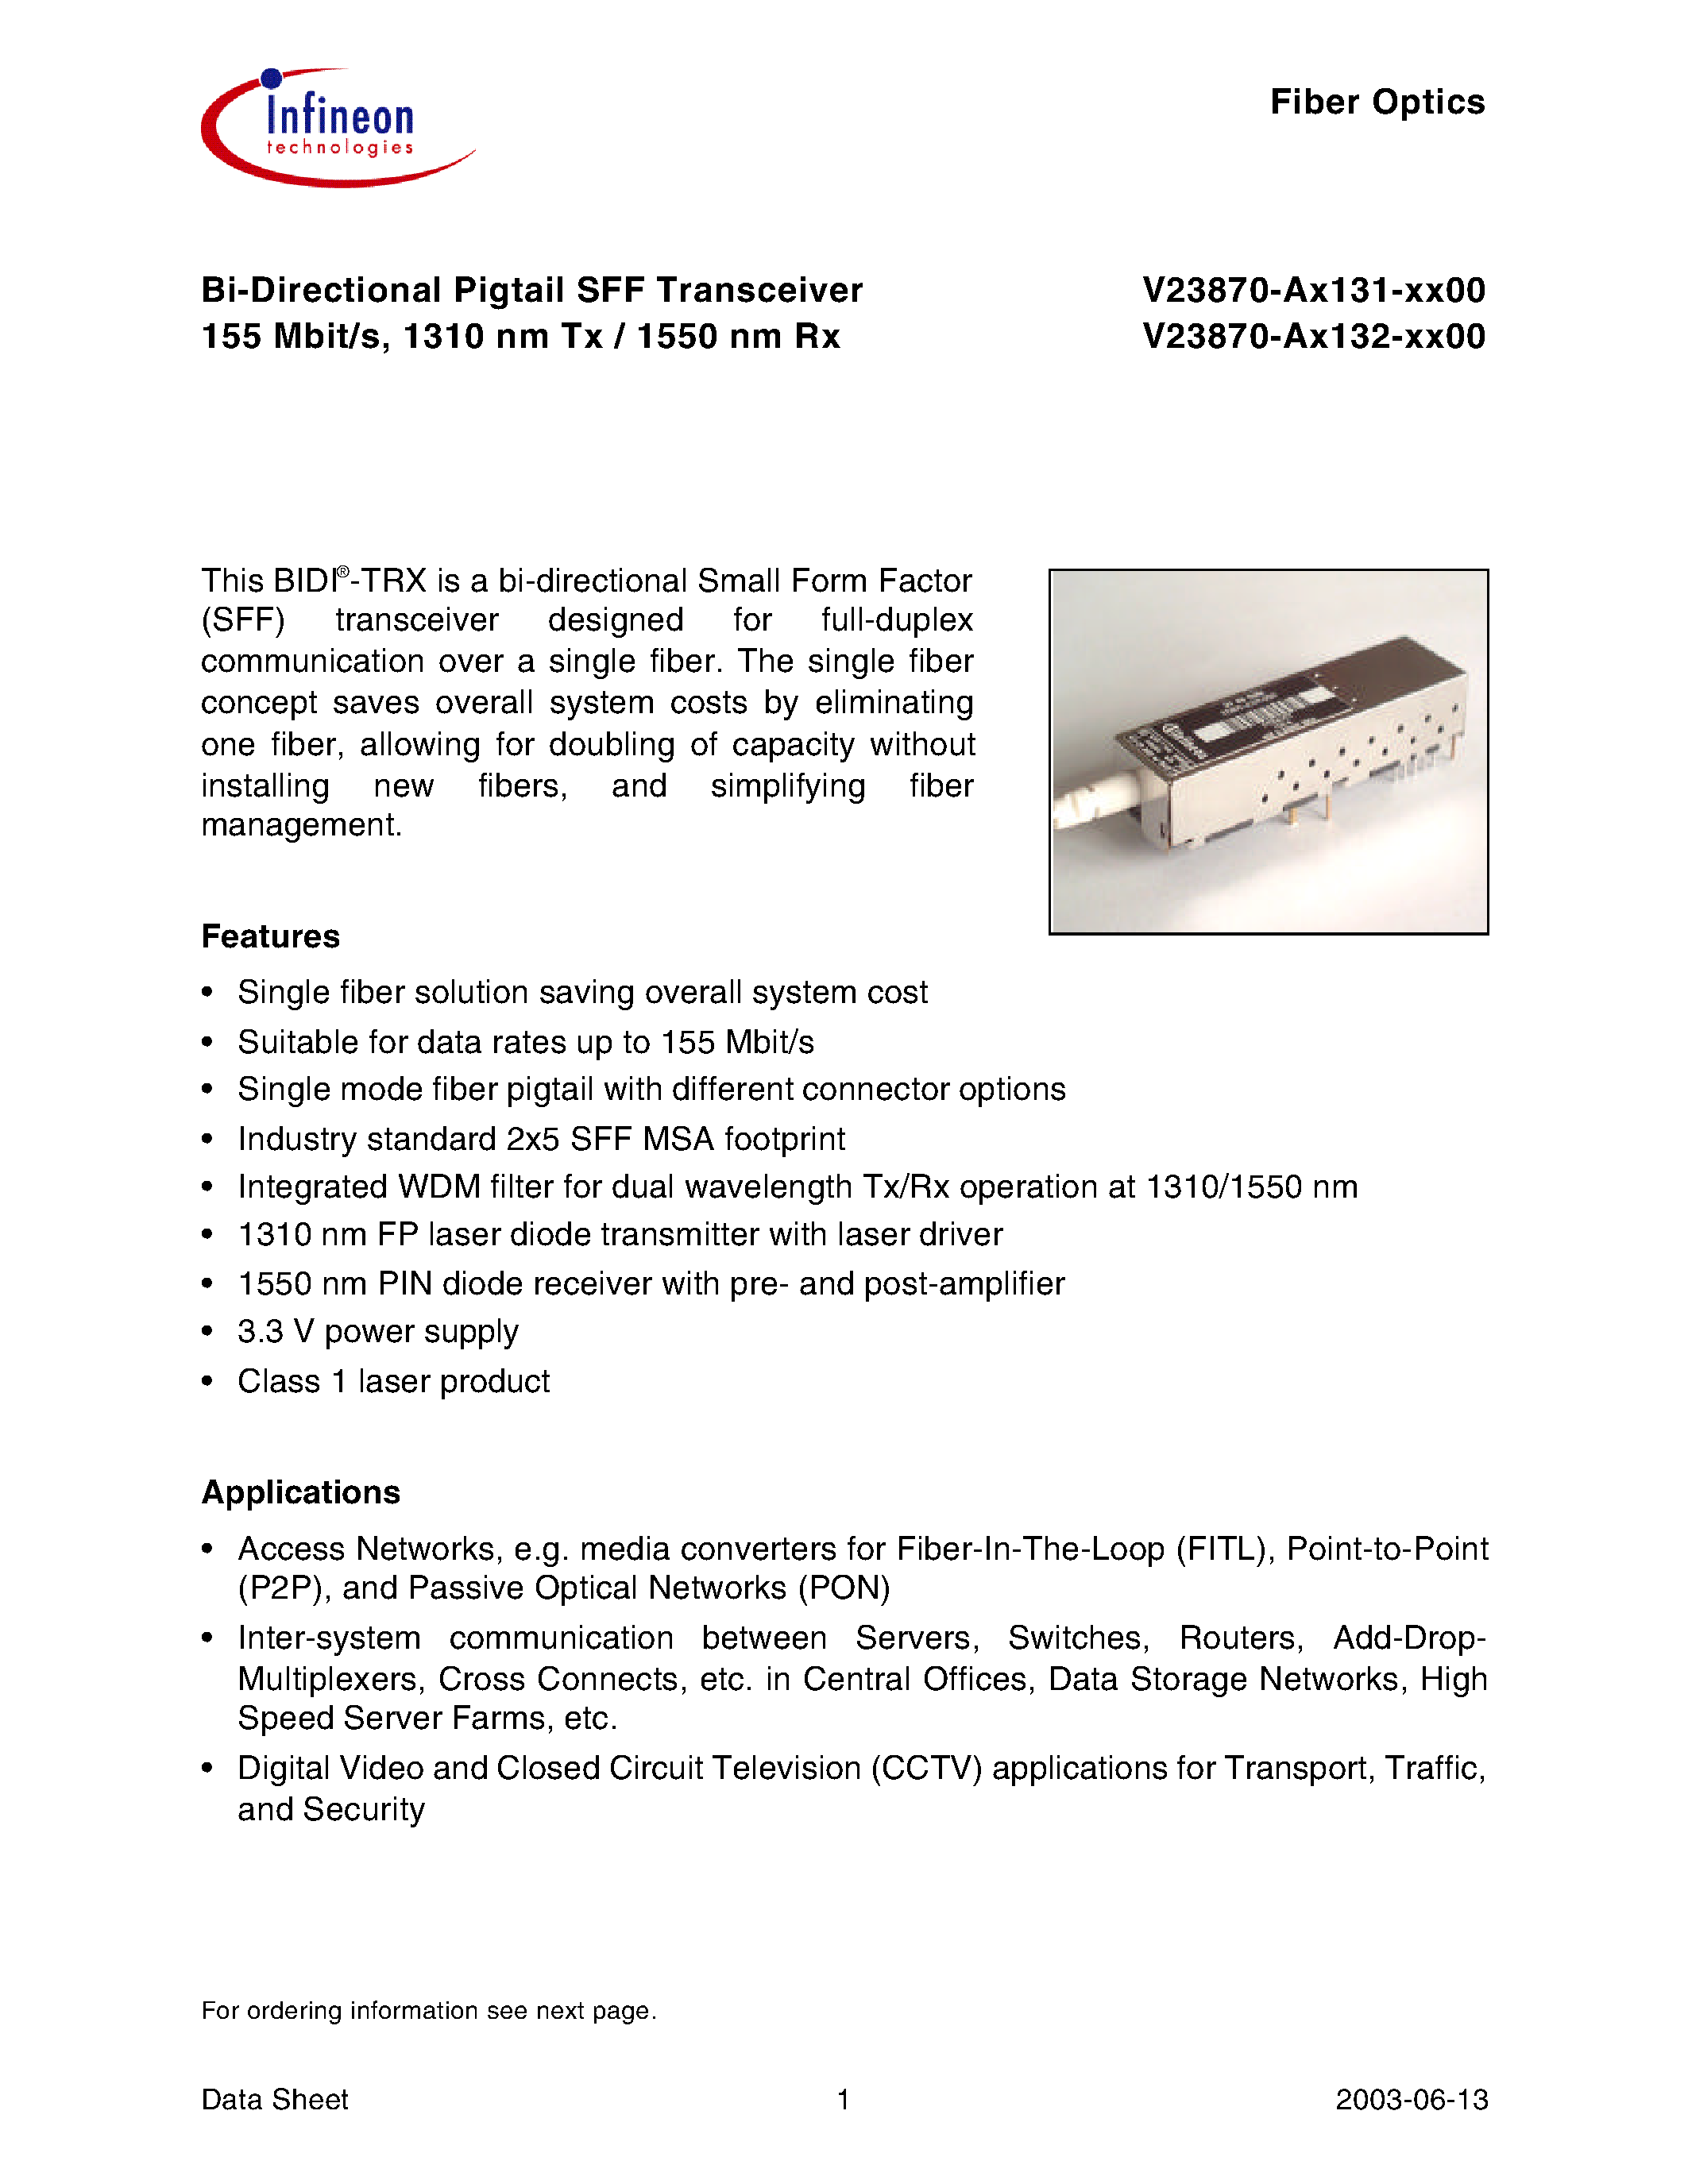 Даташит V23870-A3132-K100 - Bi-Directional Pigtail SFF Transceiver 155 Mbit/s/ 1310 nm Tx / 1550 nm Rx страница 1